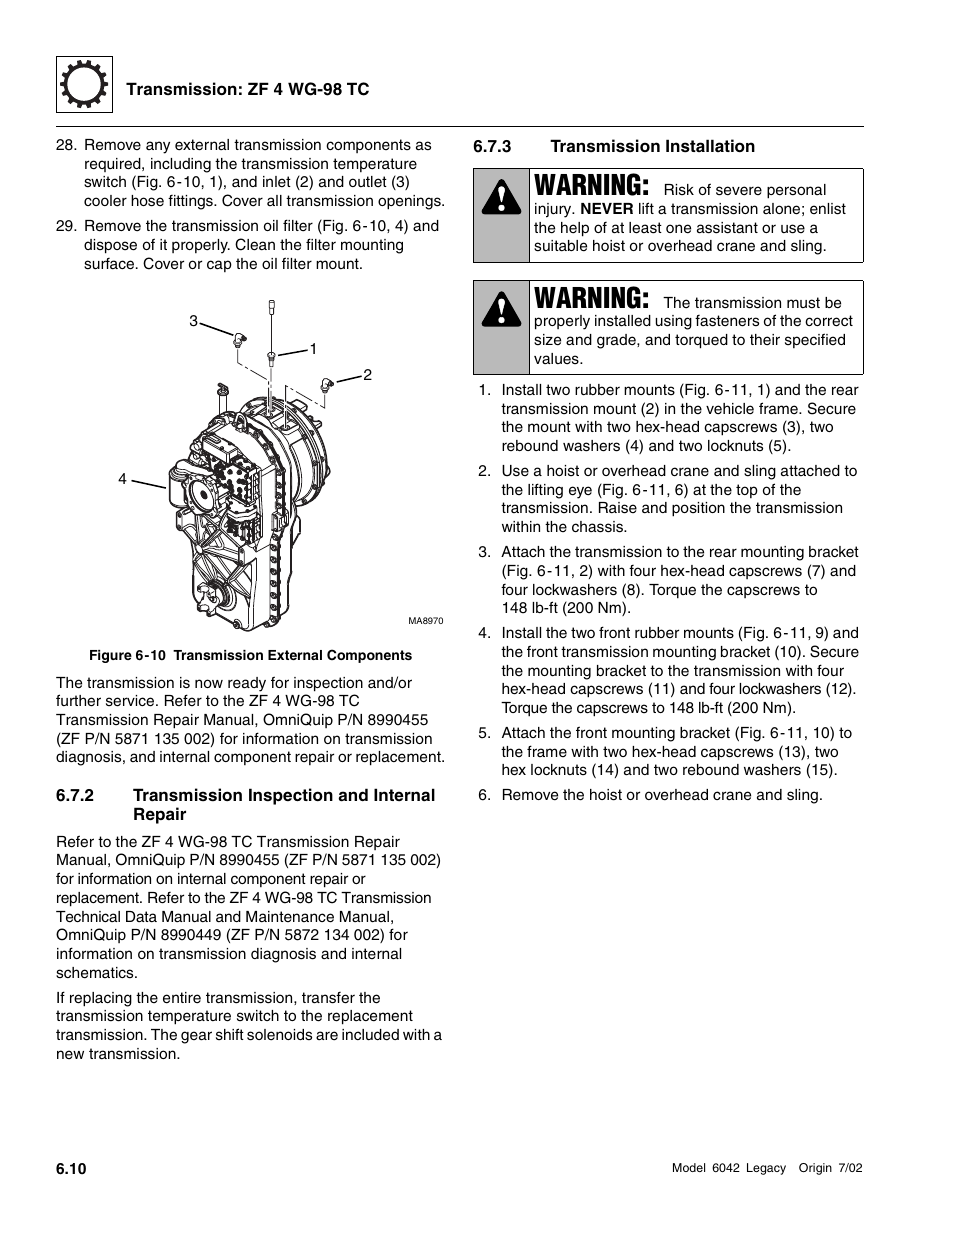 Transmission Inspection And Internal Repair Transmission Installation Warning Skytrak 6042 Service Manual User Manual Page 1 544